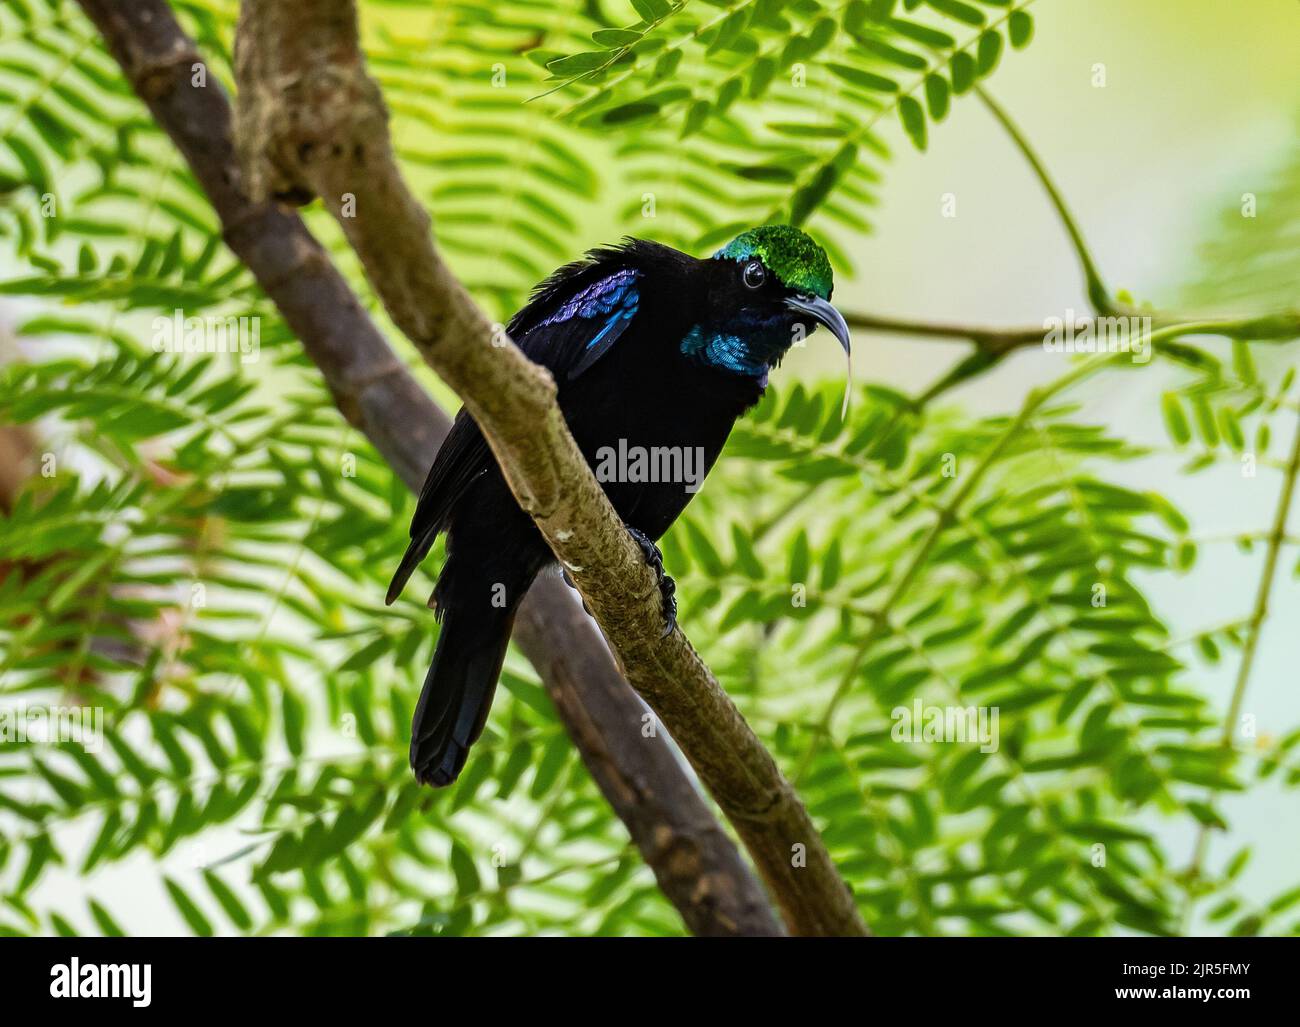 A Black Sunbird (Leptocoma aspasia) perched on a branch. Halmahera, Indonesia. Stock Photo